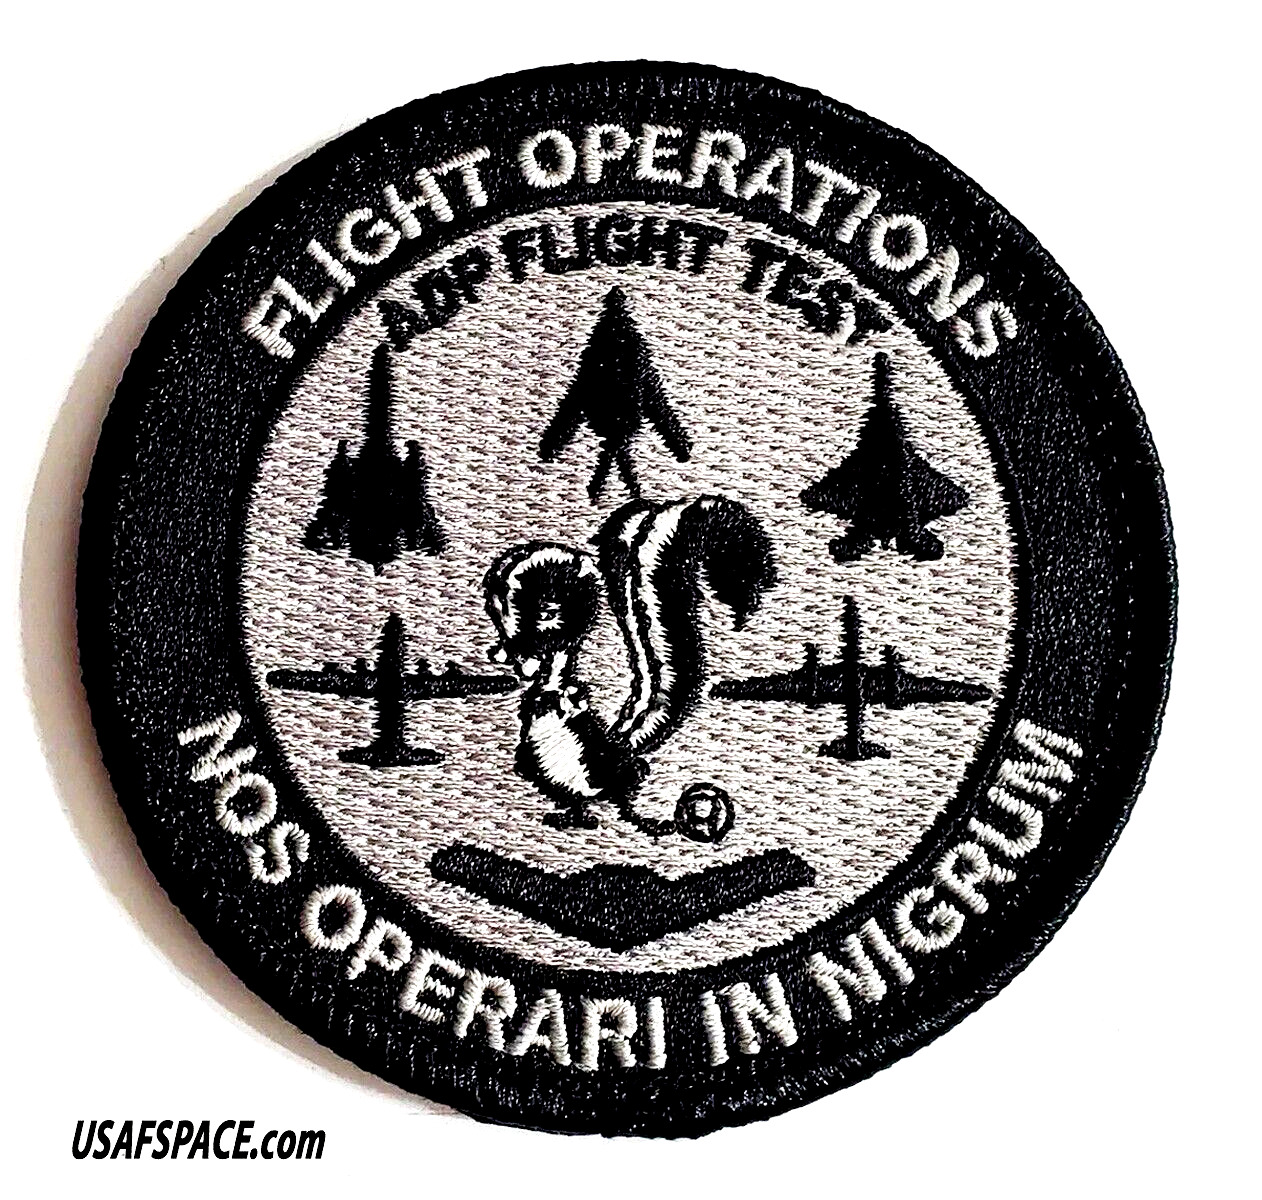 LOCKHEAD MARTIN SKUNK WORKS- FLIGHT OPERATIONS -ADP FLIGHT TEST- USAF VEL PATCH